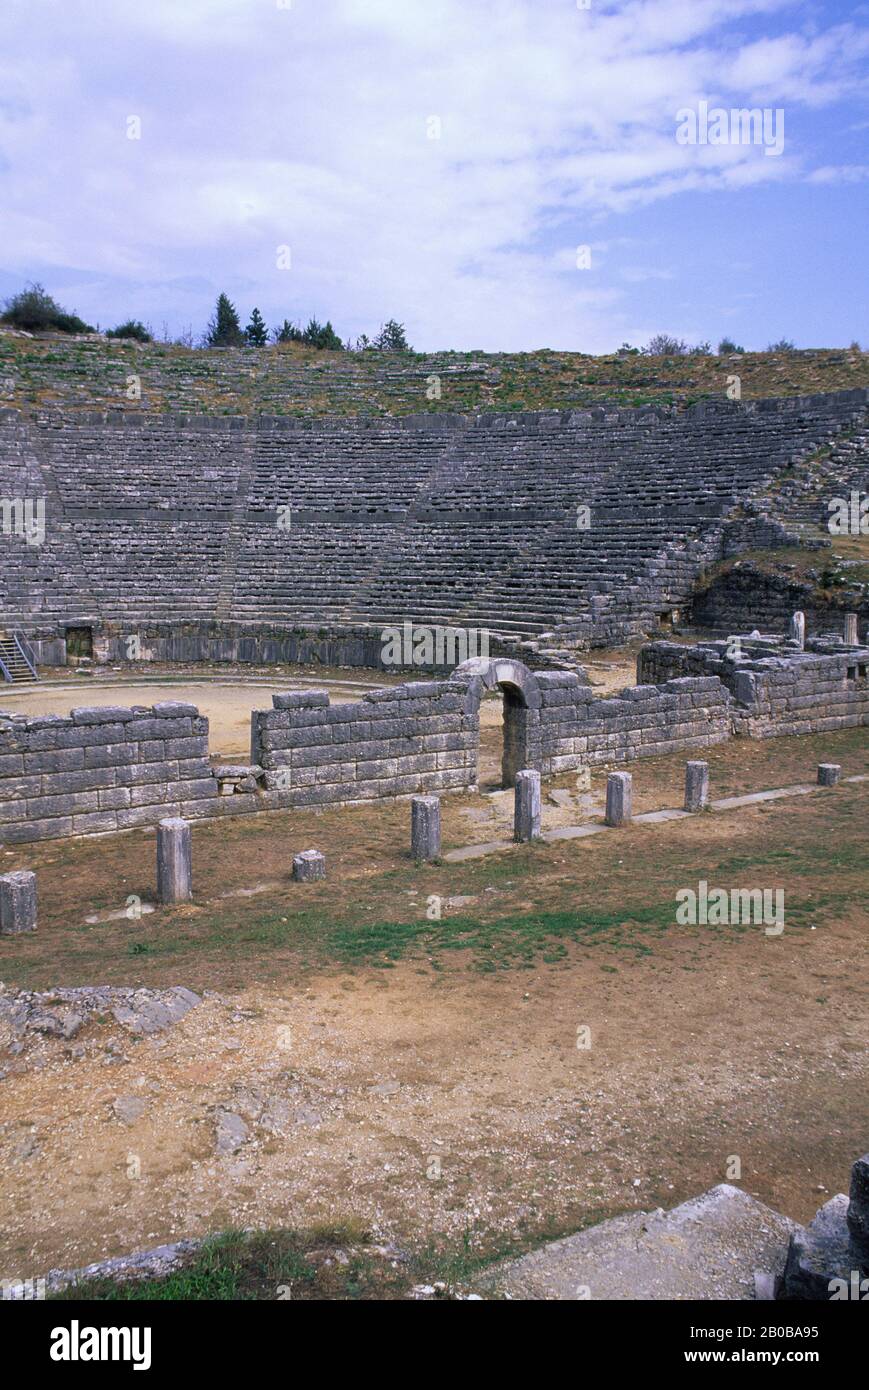 GREECE, DODONA, MAJOR RELIGIOUS CENTER OF NW GREECE, THEATRE FROM 3RD CENTURY BC Stock Photo